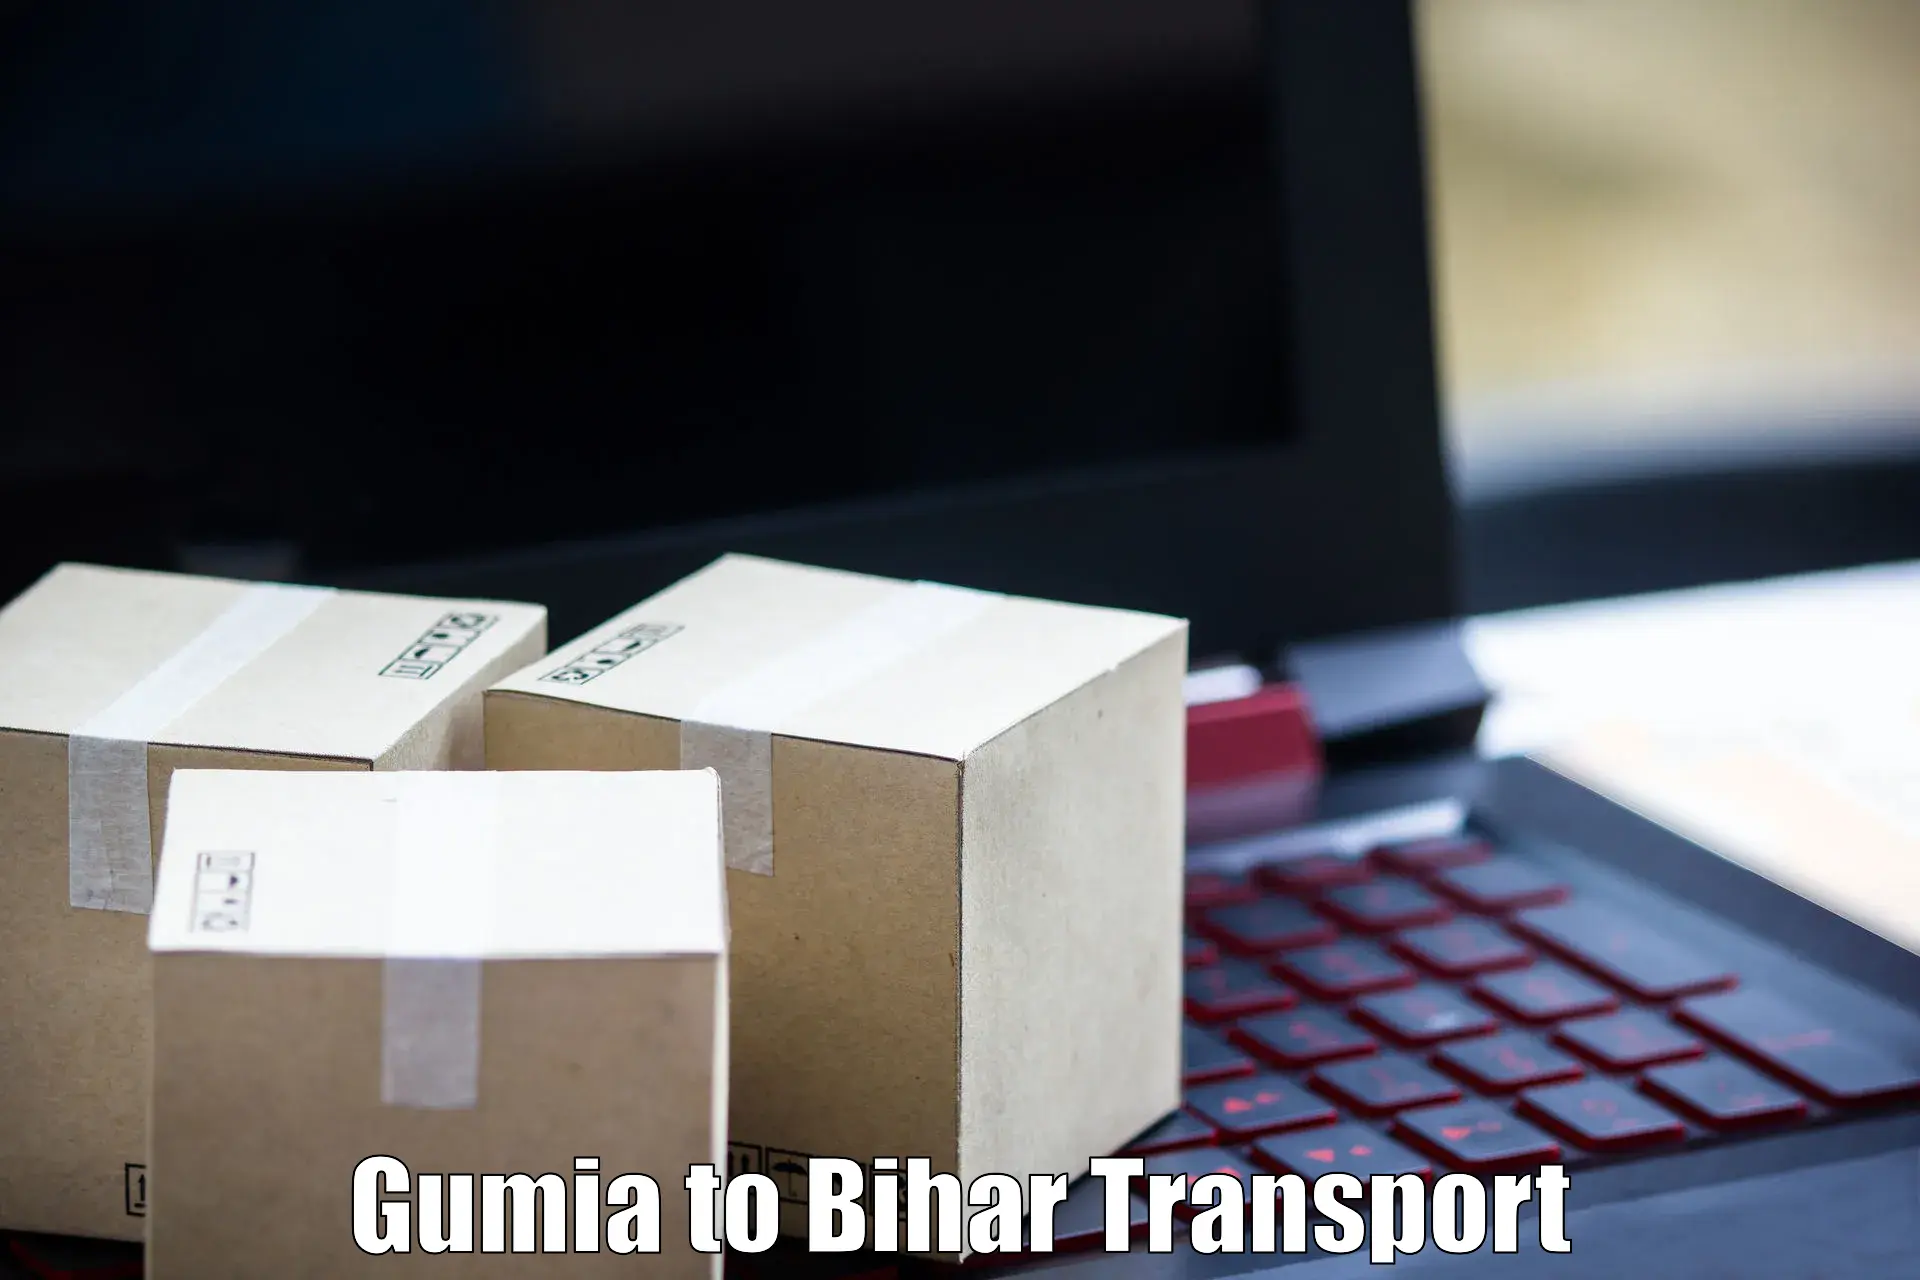 Furniture transport service Gumia to Bihar